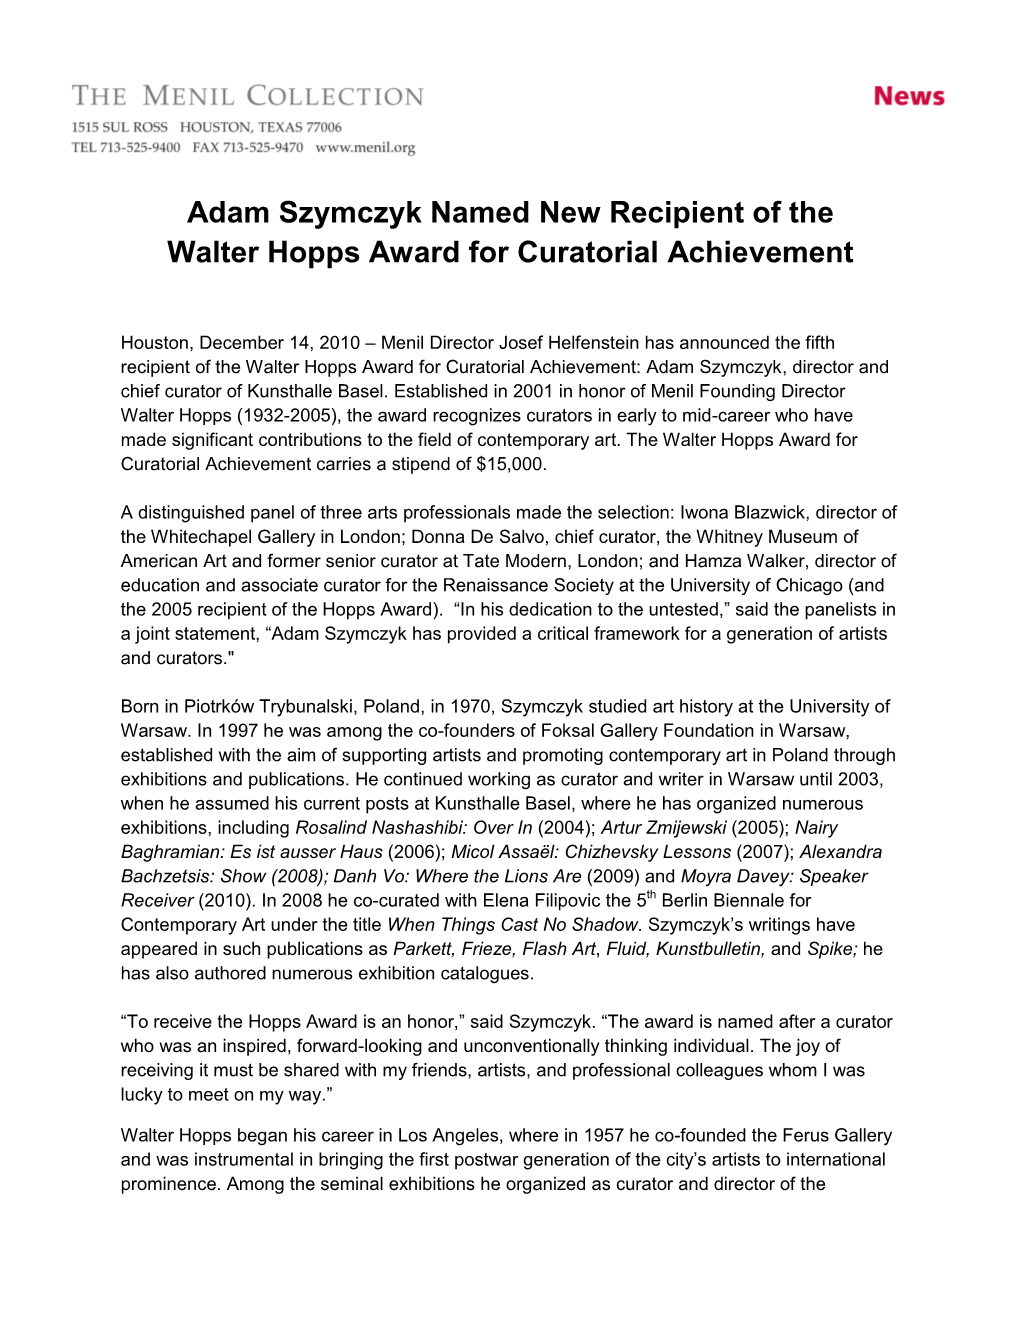 Adam Szymczyk Named New Recipient of the Walter Hopps Award for Curatorial Achievement